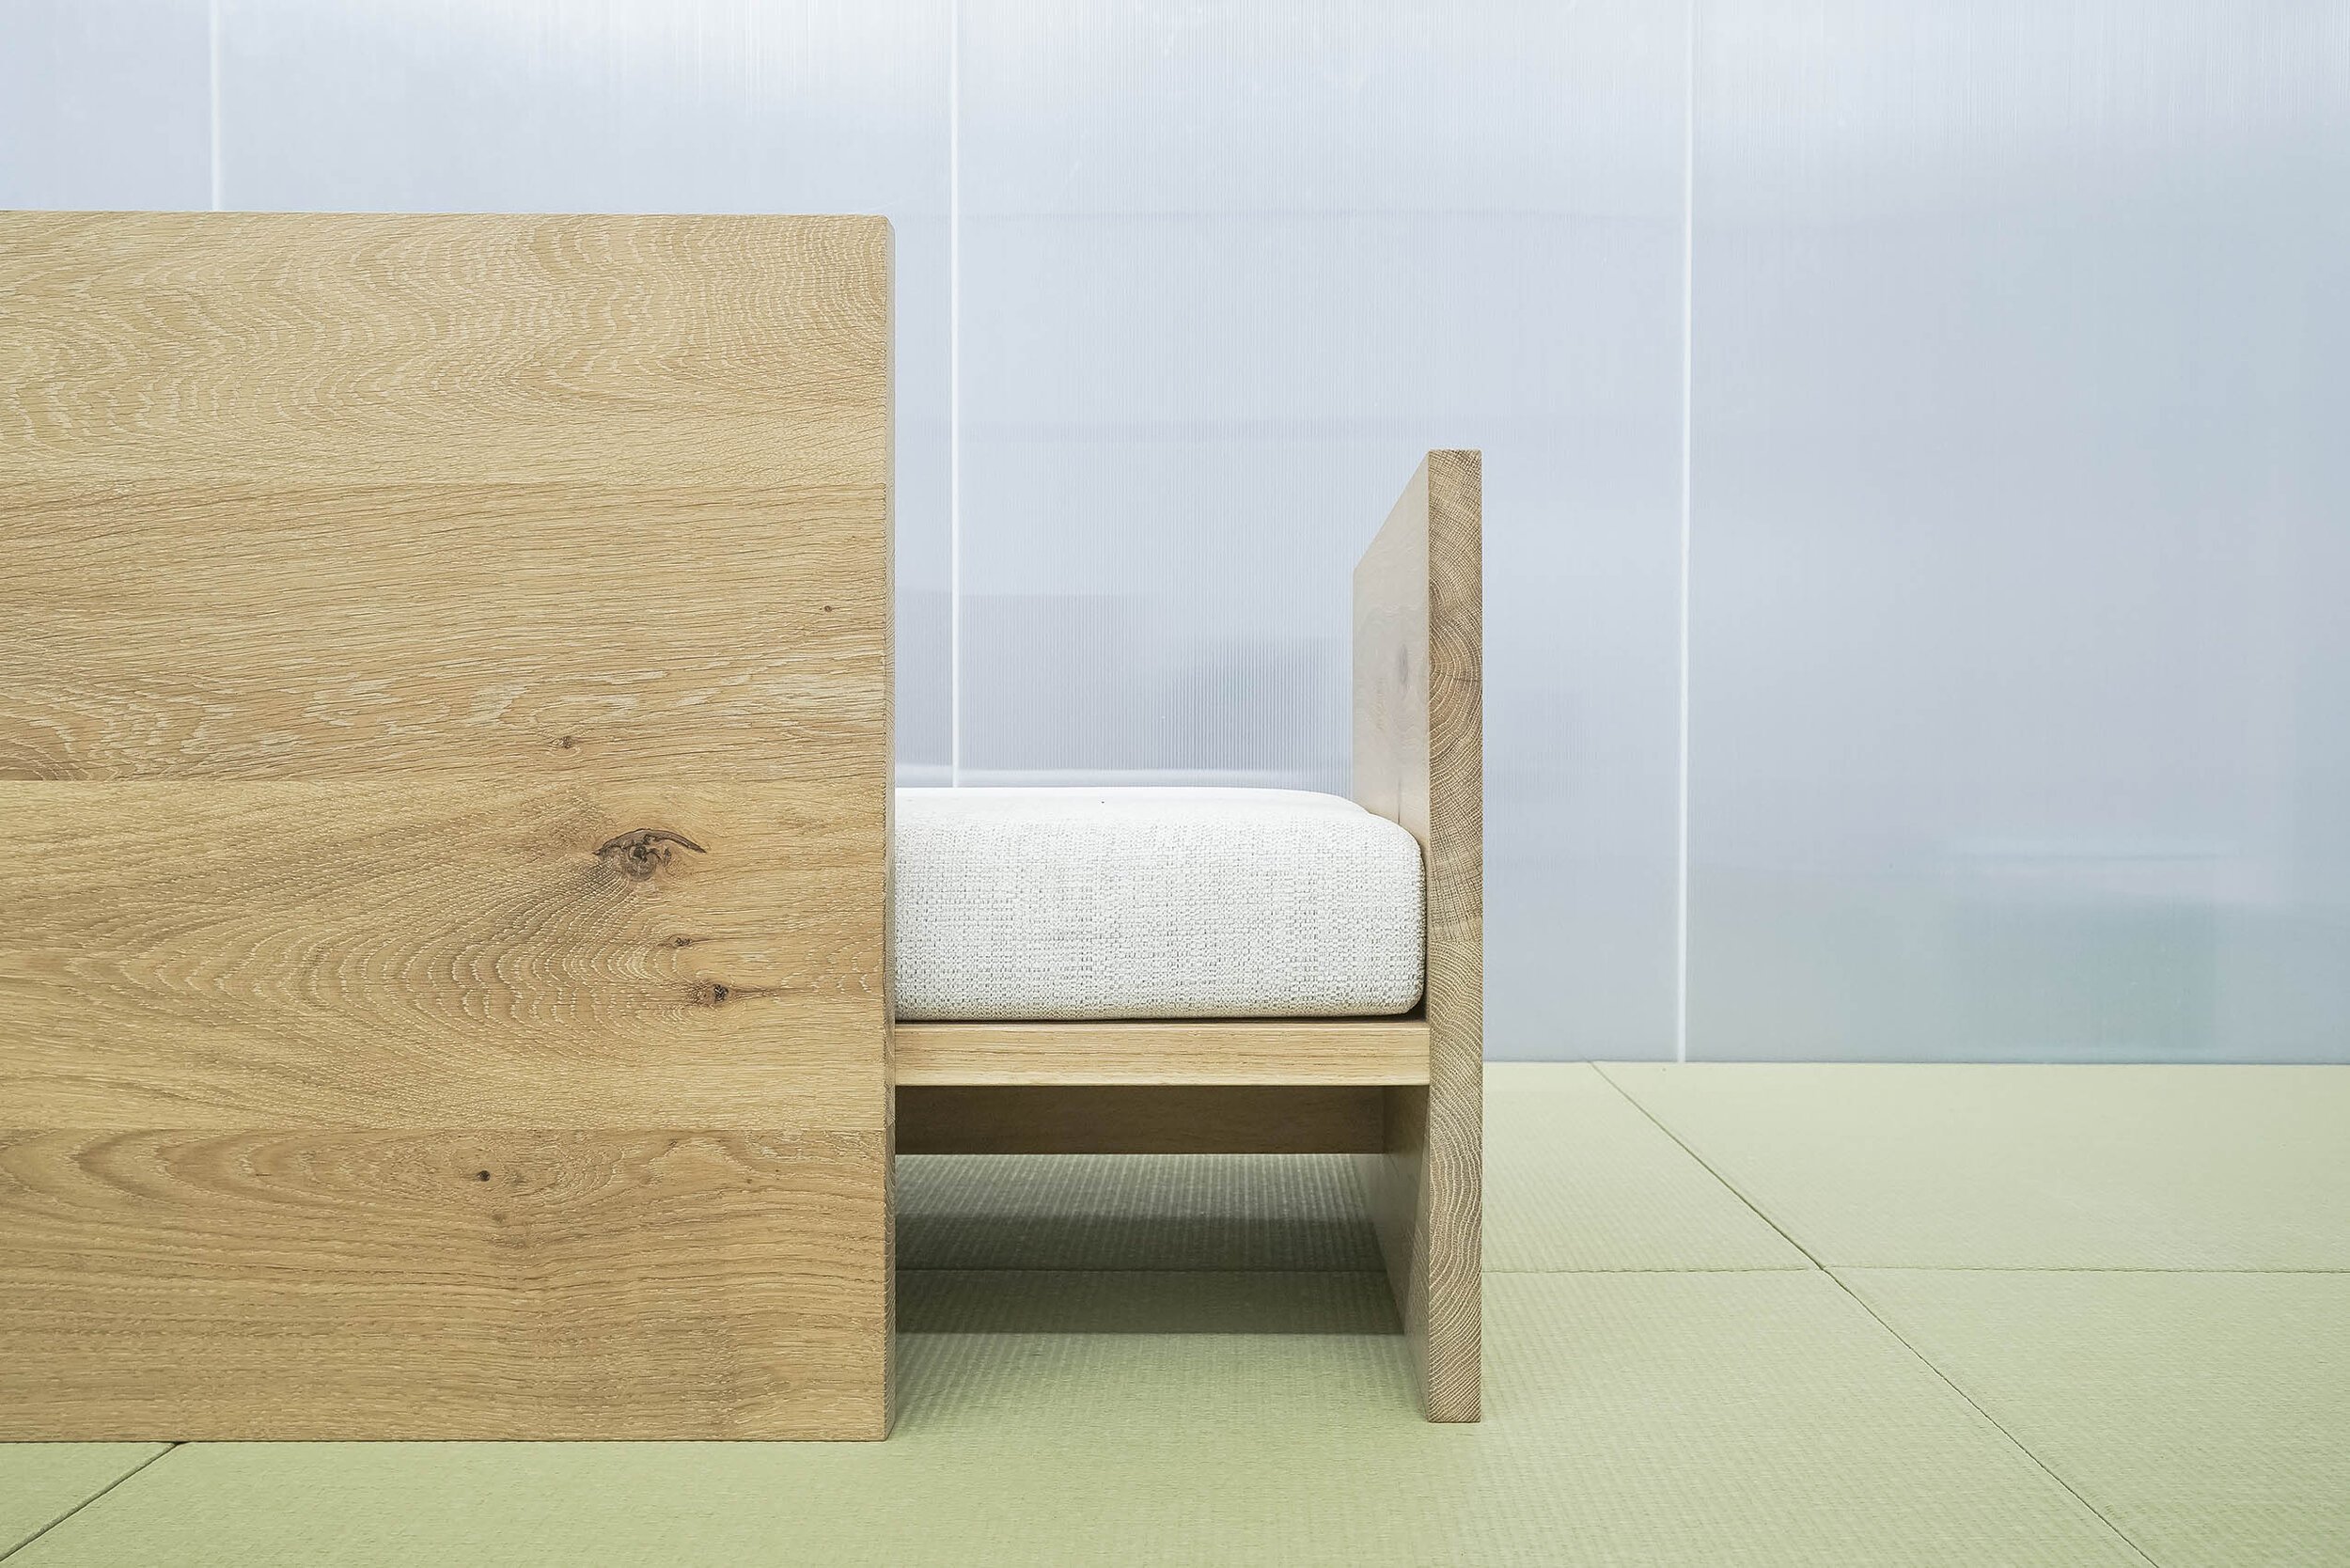  2id Architectsの岡田宰がデザインしたソファ DDD SOFA。背、側板、座面を組み合わせたシンプルな構成 